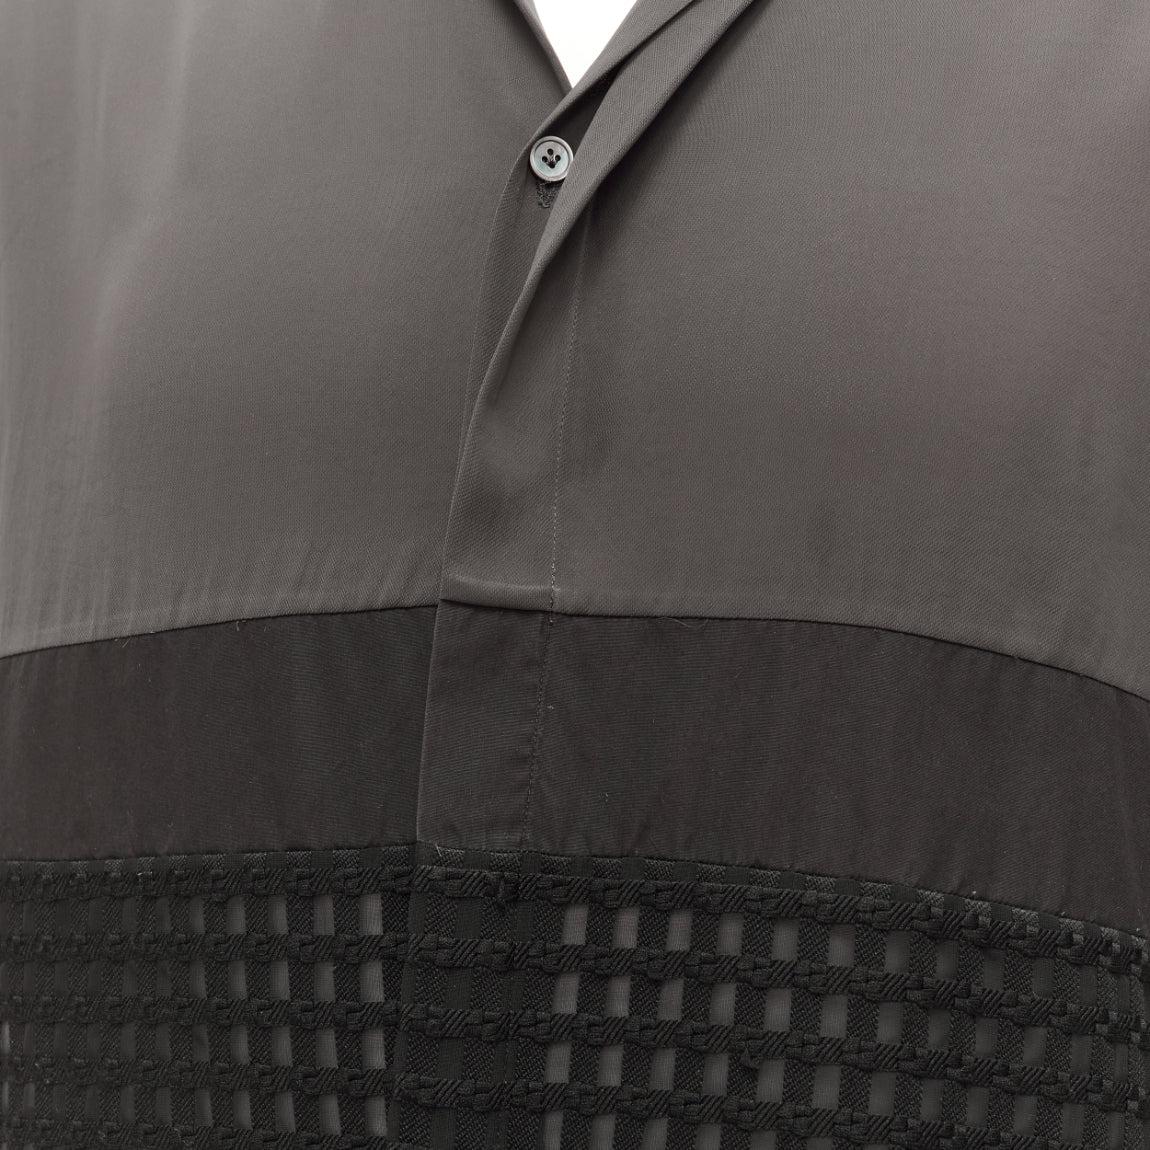 LANVIN grey black silky twill mix texture short sleeves dress shirt EU38/15 S For Sale 2